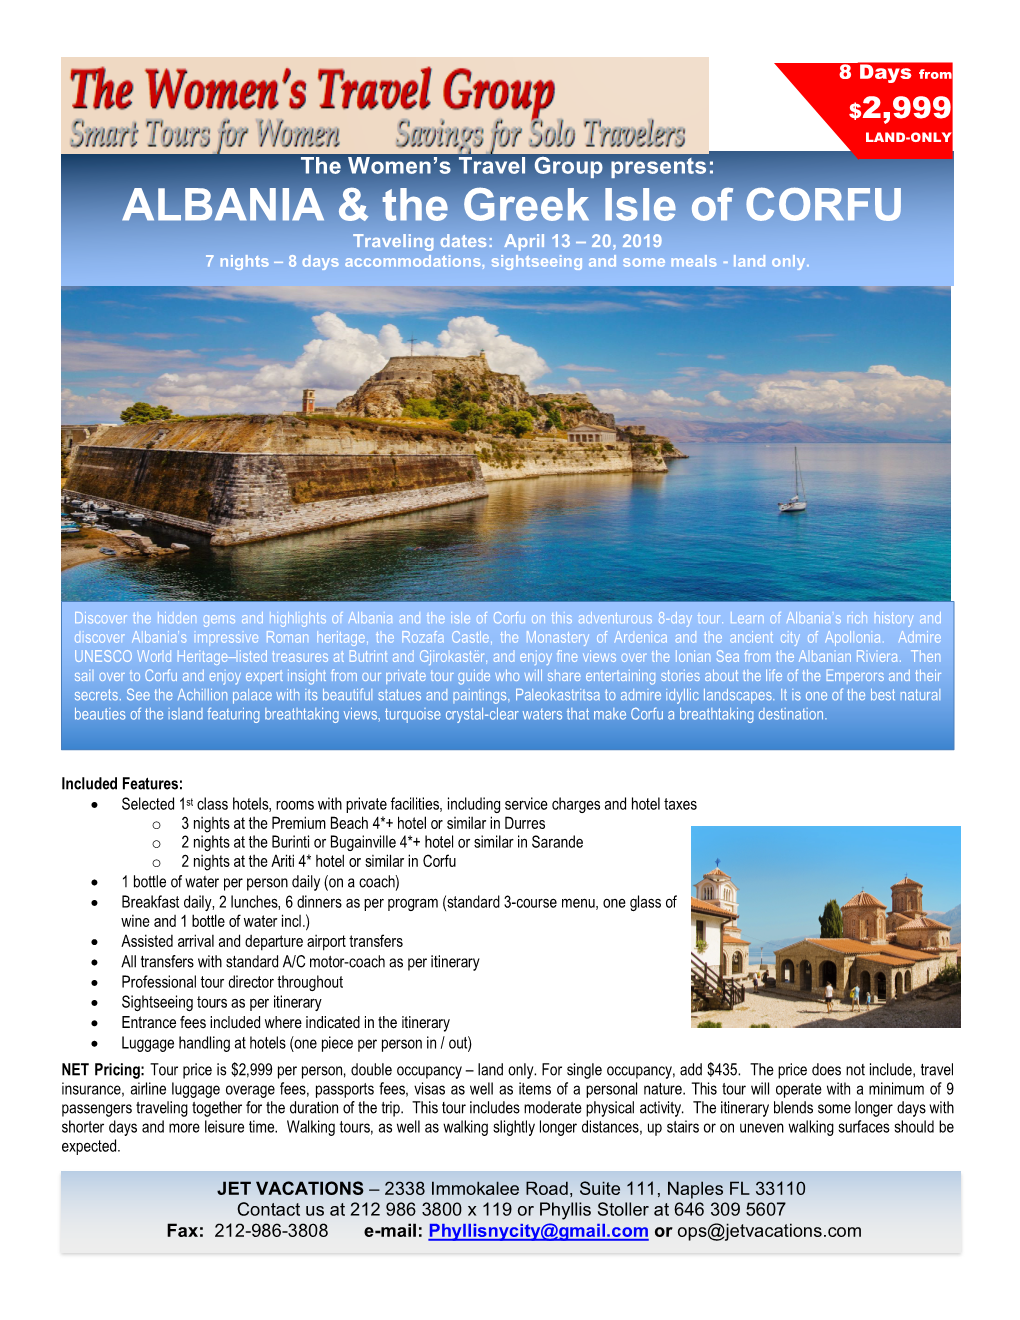 ALBANIA & the Greek Isle of CORFU